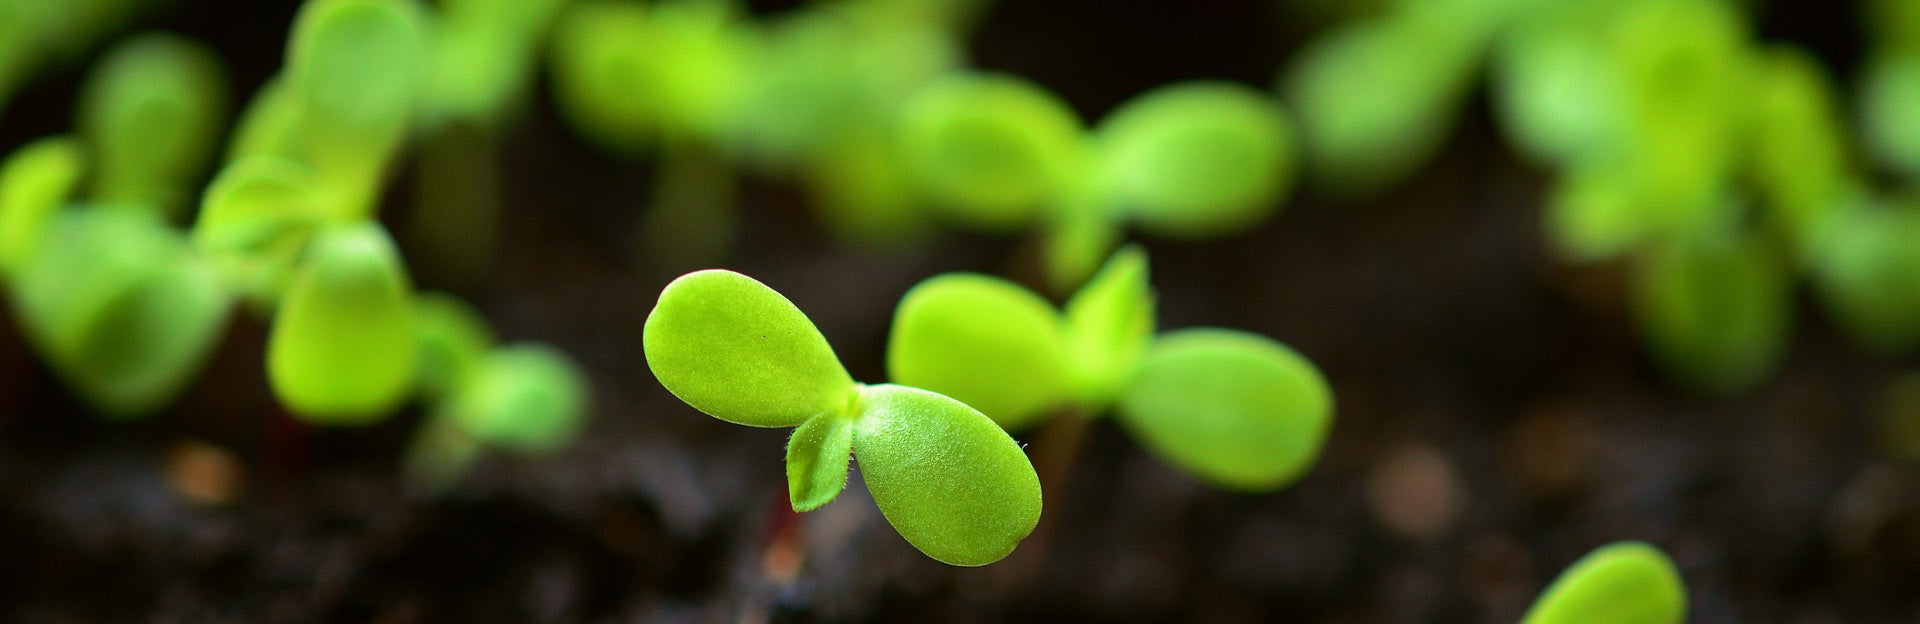 Seedlings / pixabay.com